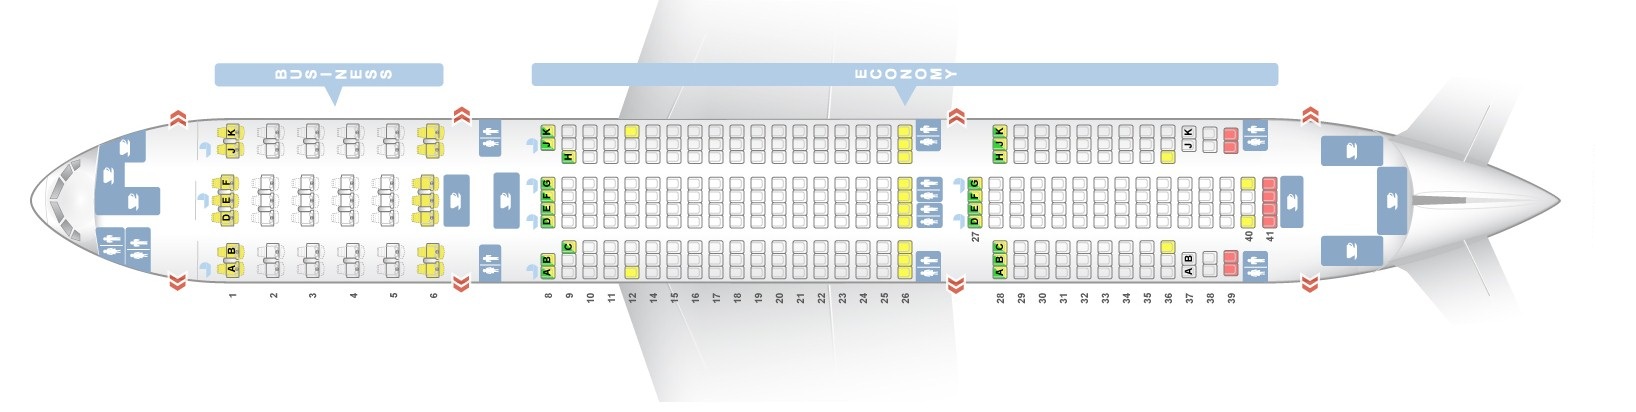 Emirates Boeing 777 200lr Seating Chart